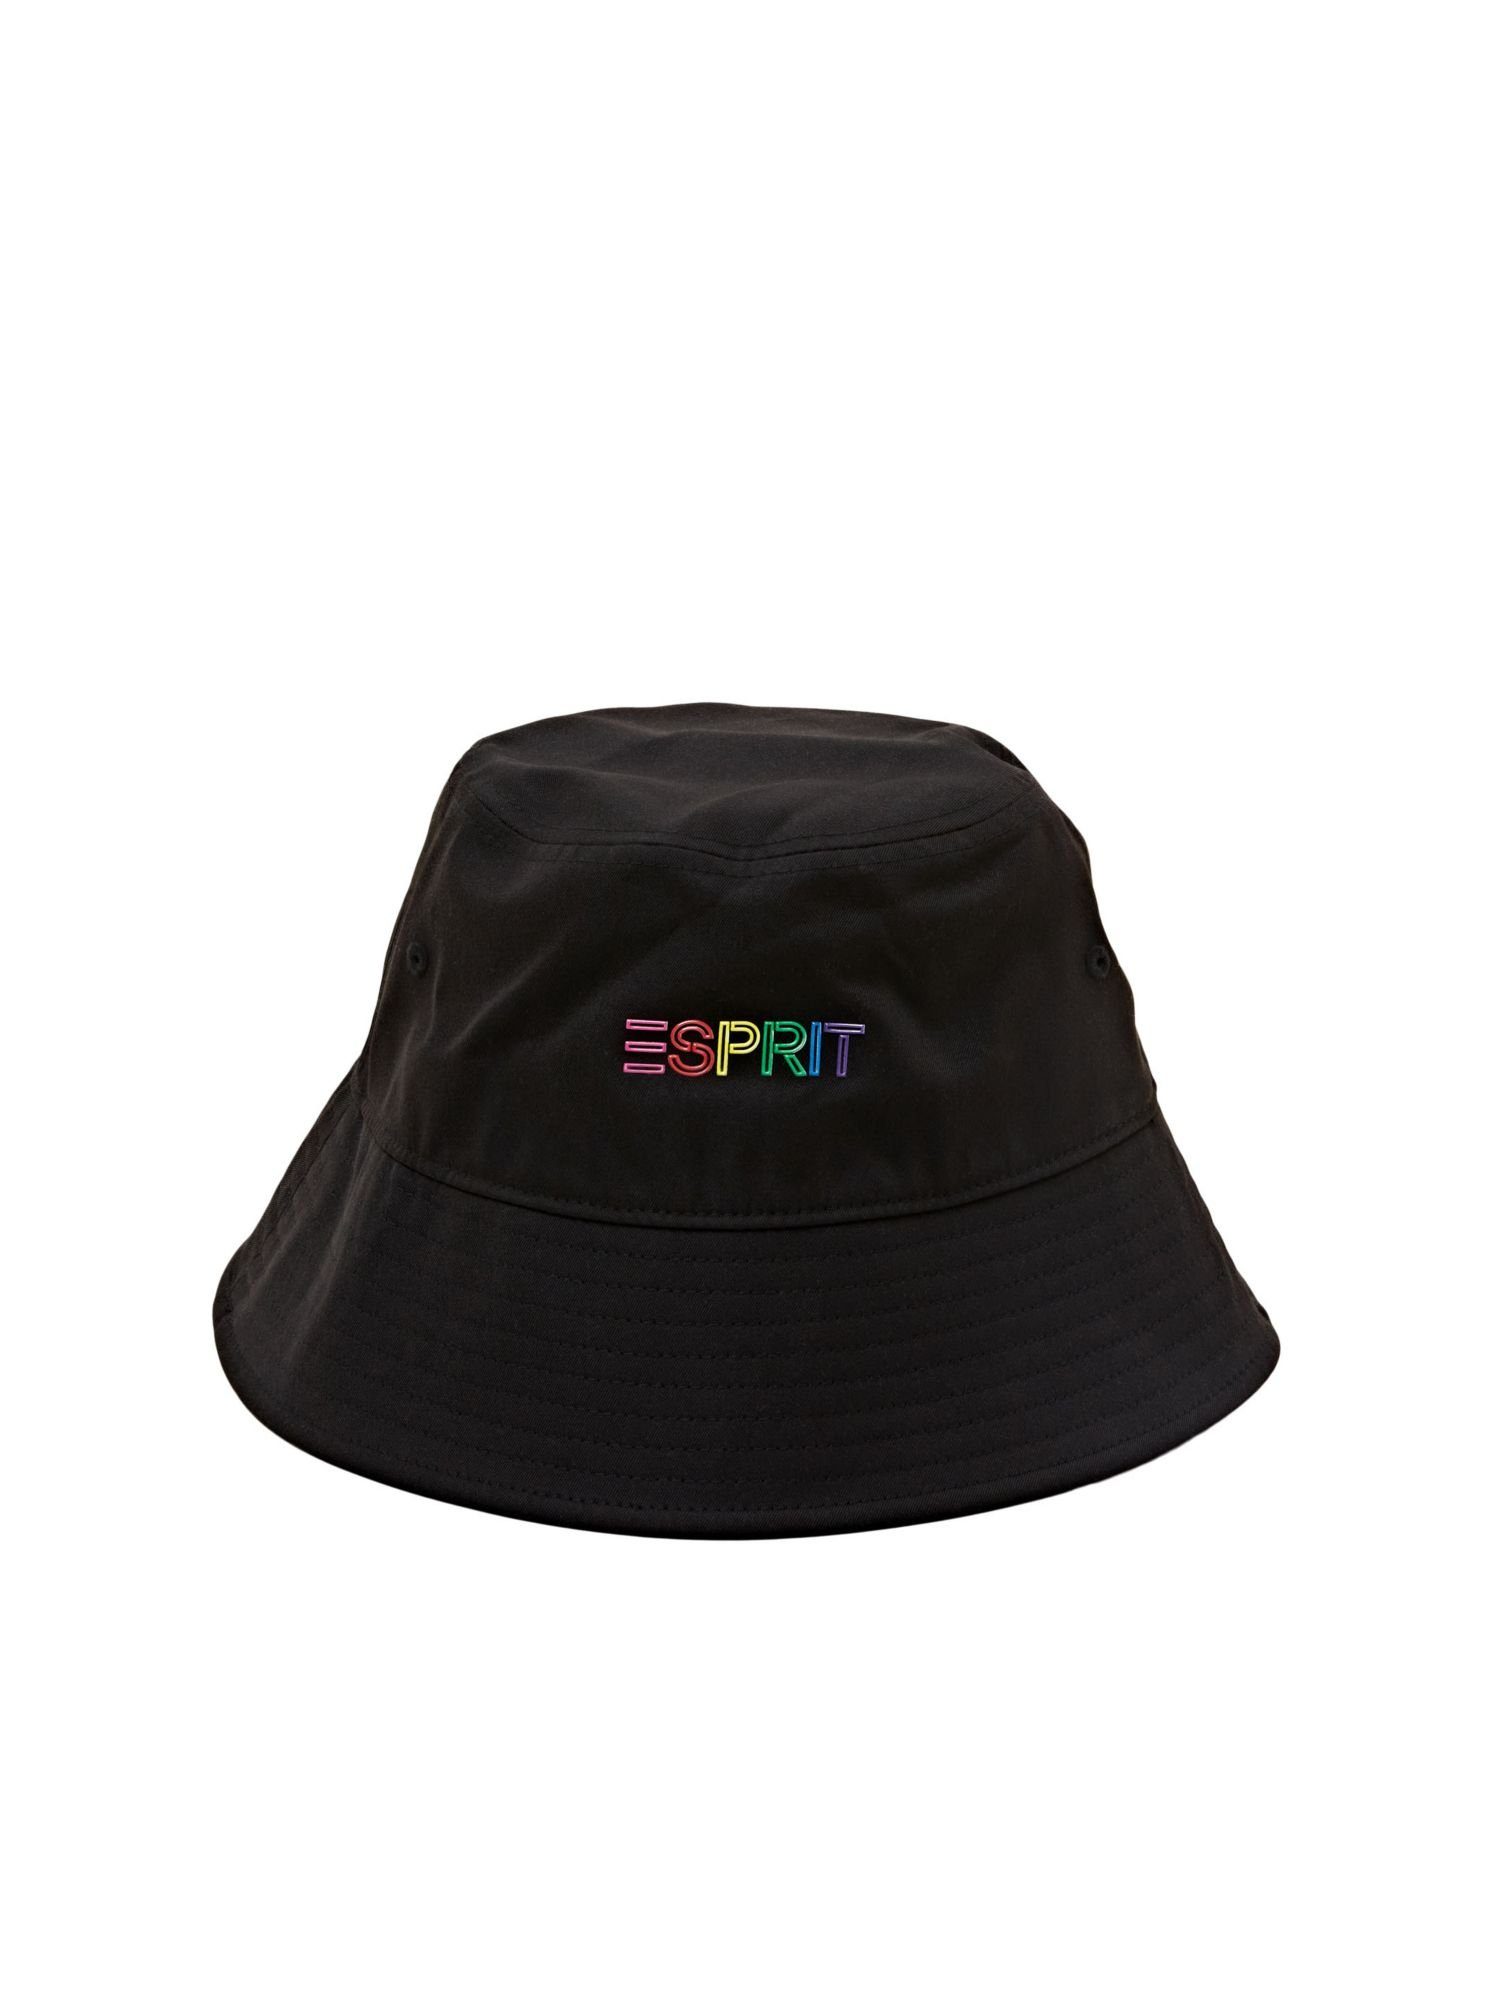 Esprit Baseball Cap Bucket Hat aus Twill mit Applikation